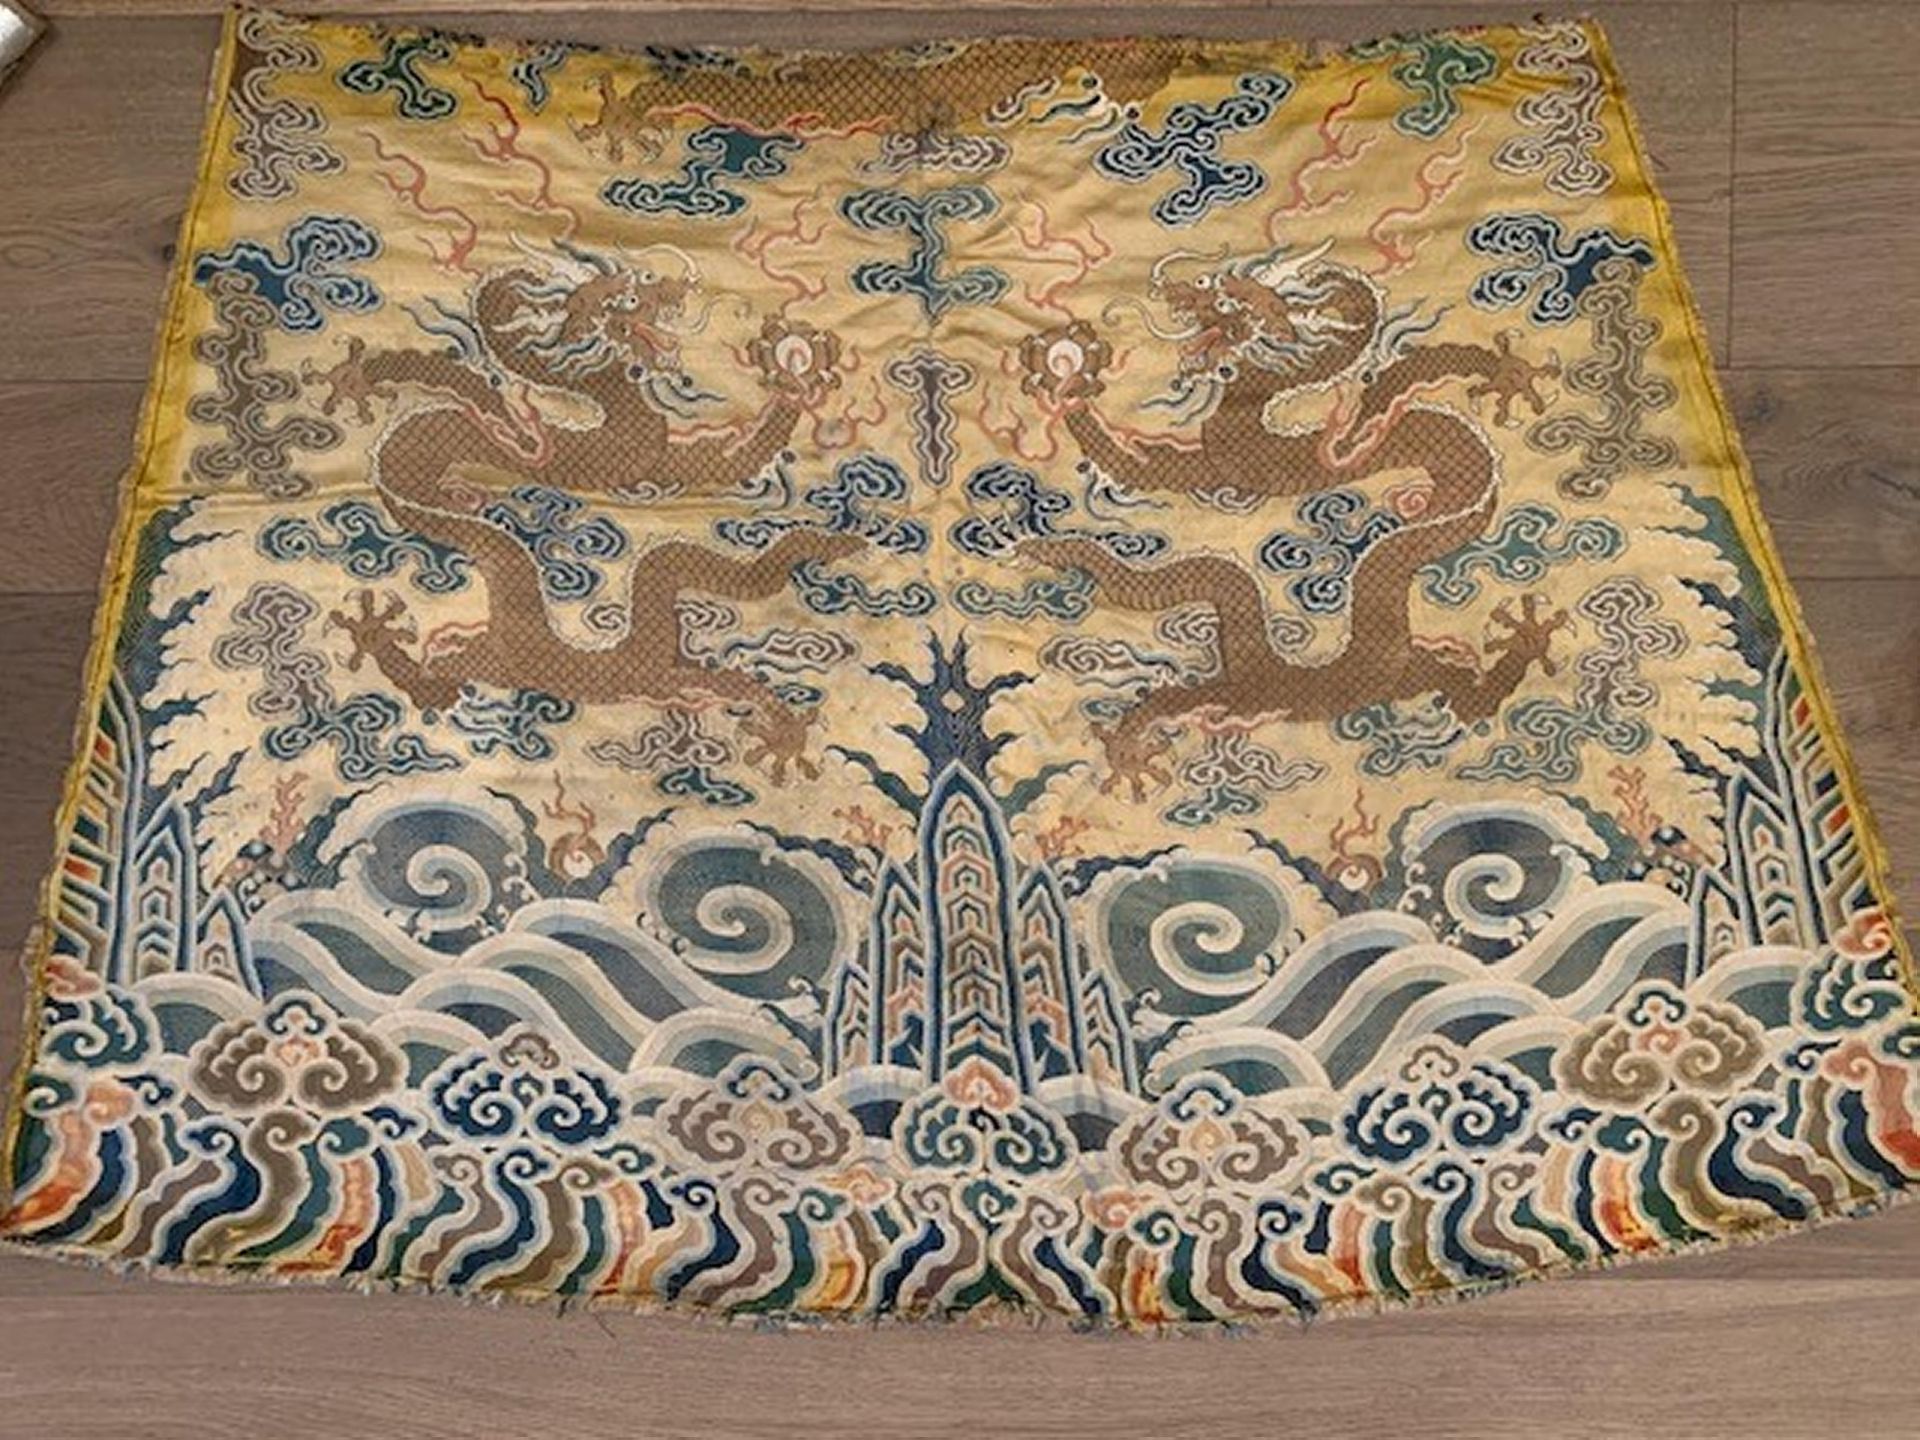 RARE FRAGMENT OF AN IMPERIAL YELLOW DRAGON ROBE. Origin: China. Dynasty: Qing dynasty. Date: 18th c. - Bild 2 aus 4